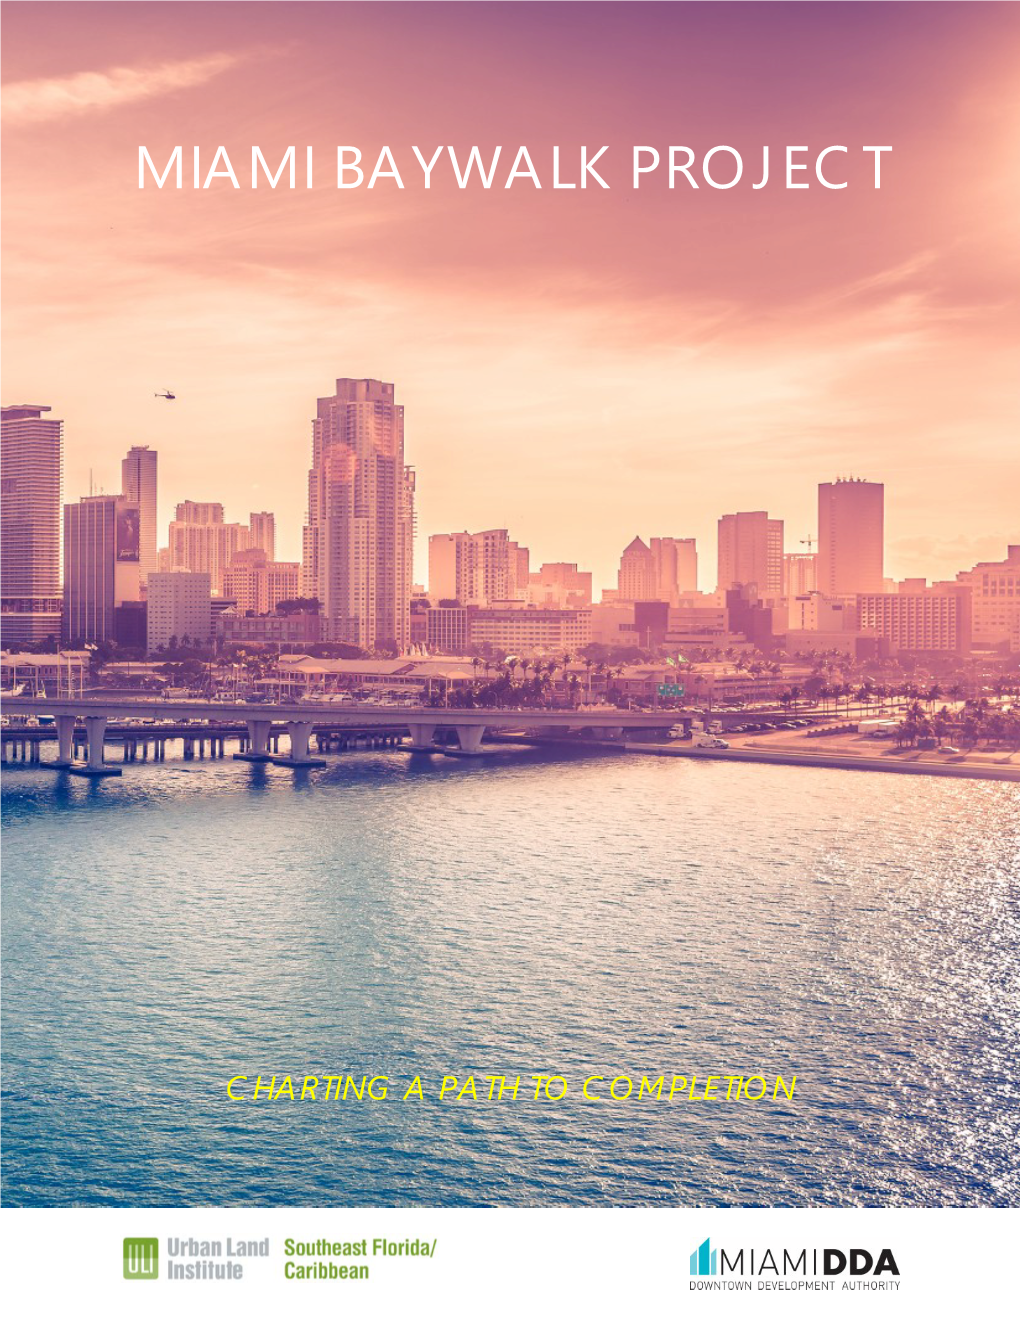 Miami Baywalk Project